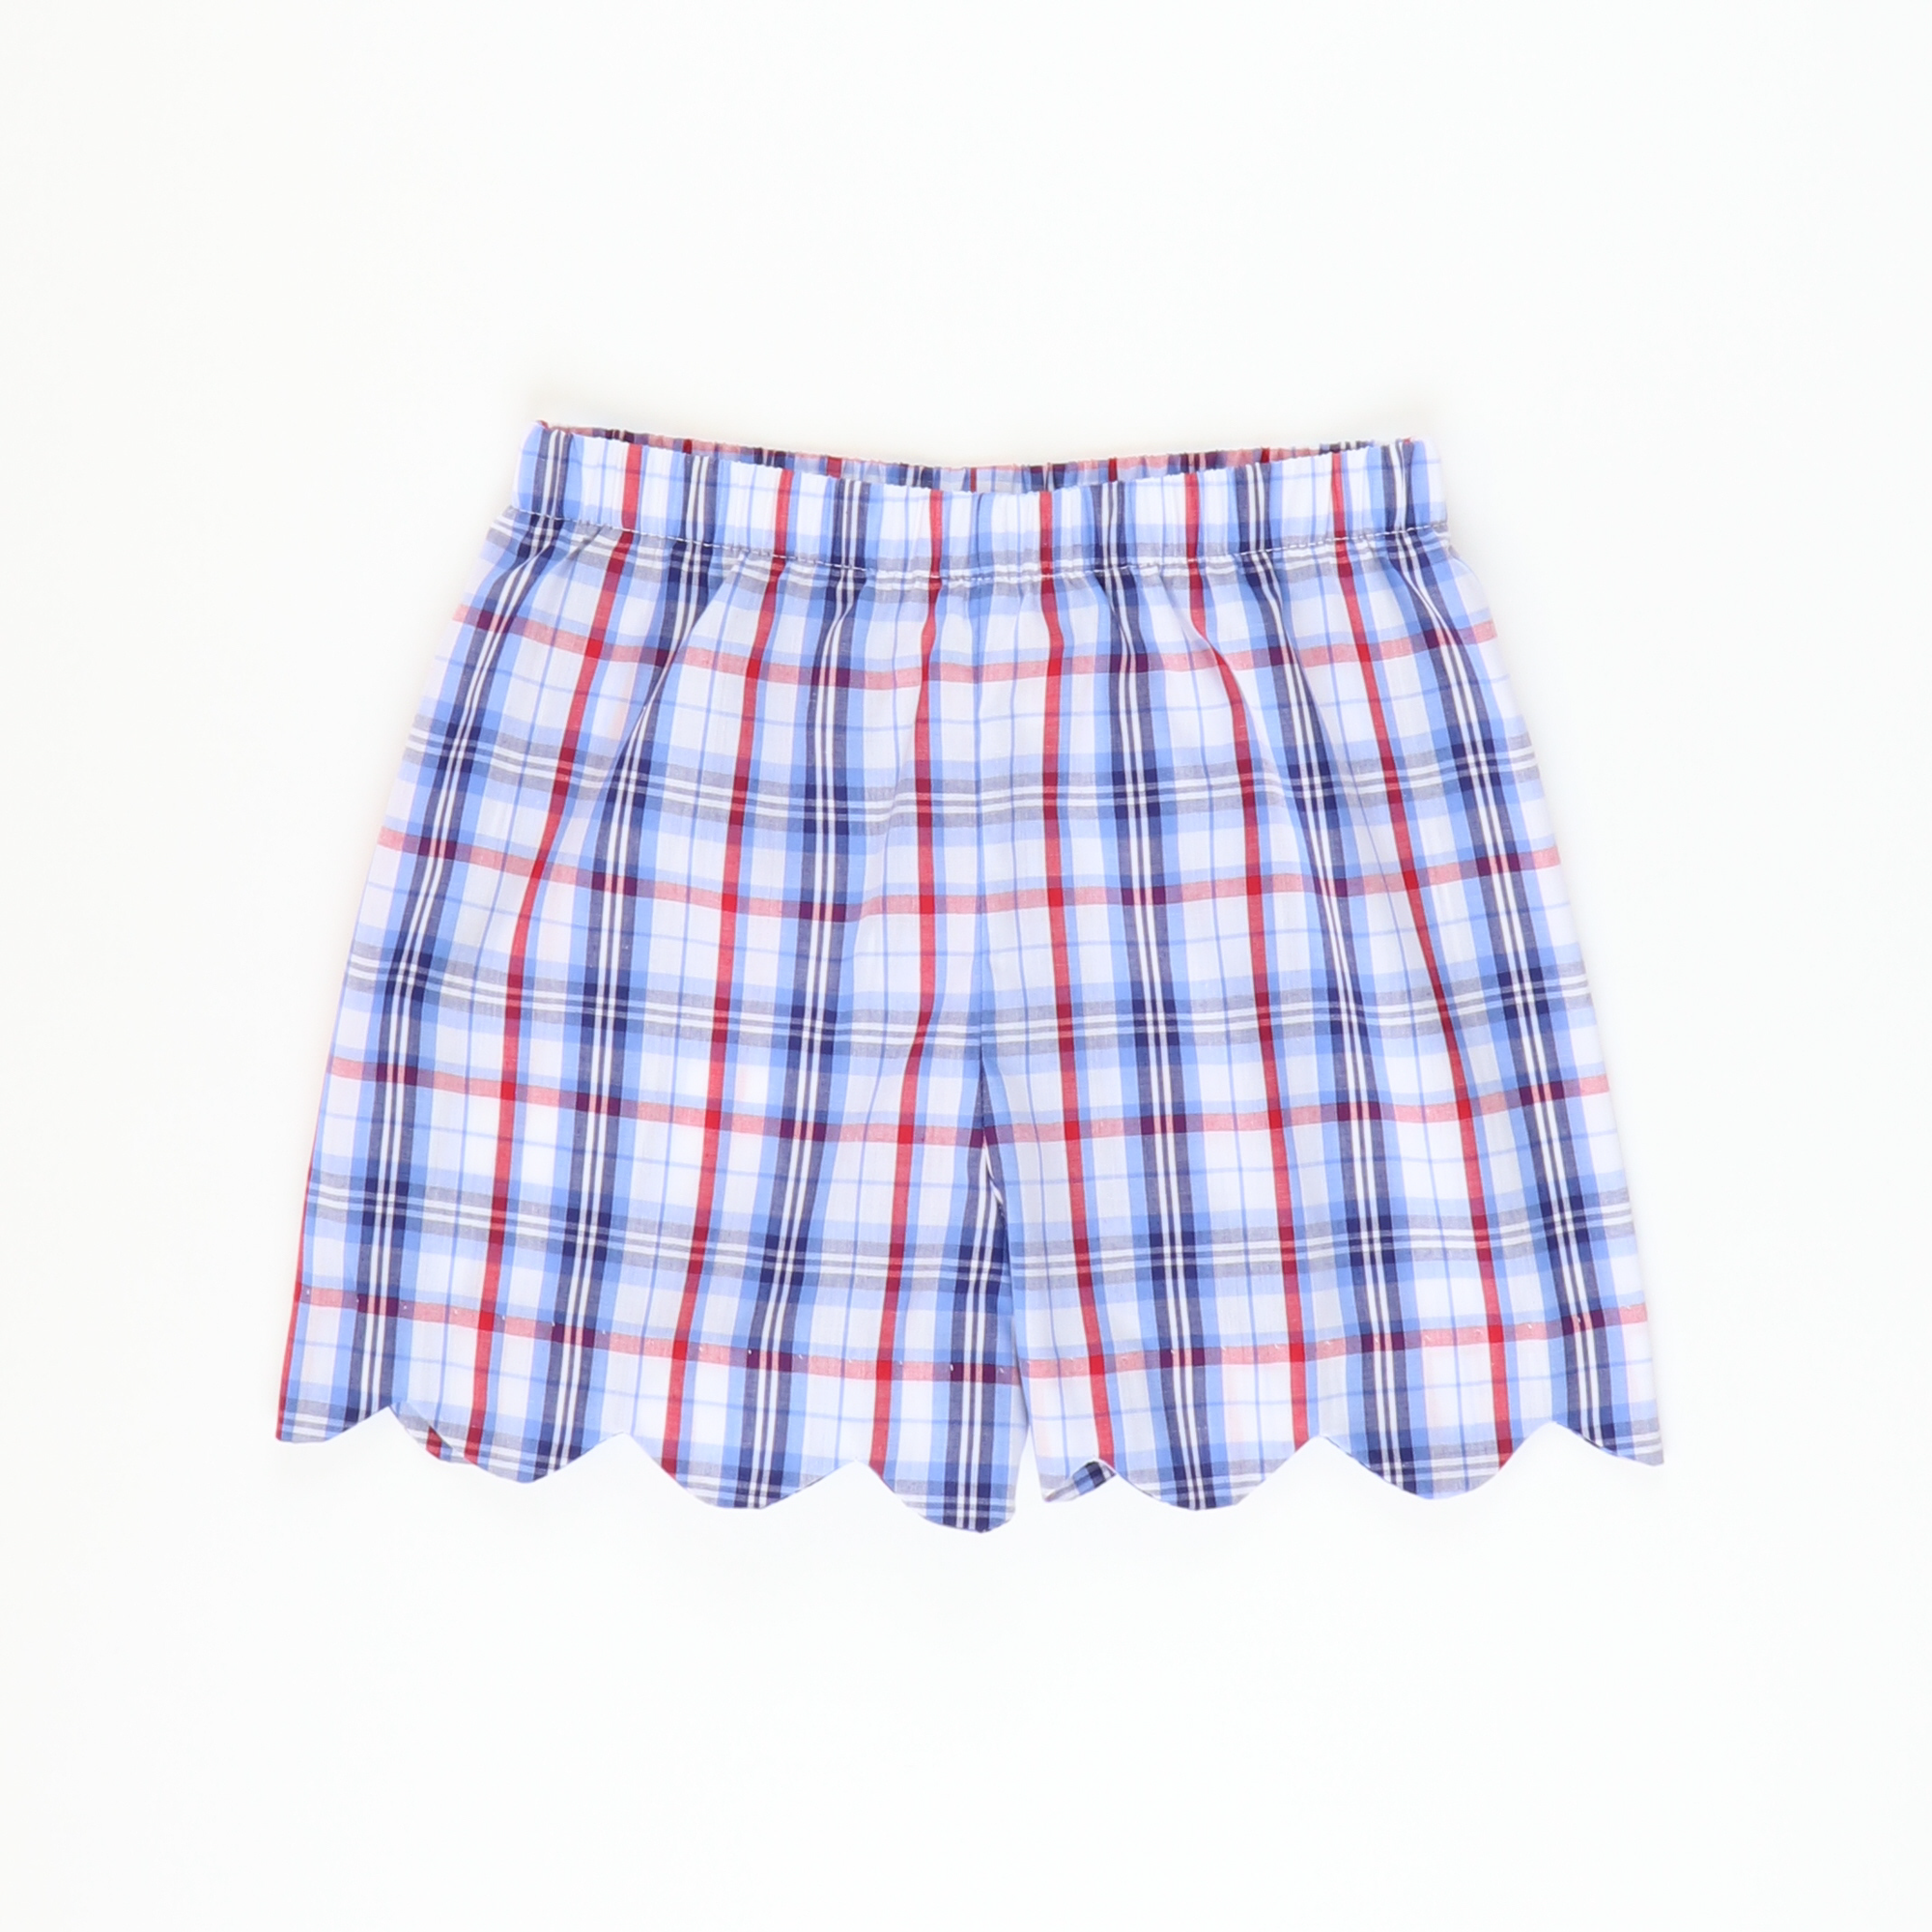 Scalloped Girl Shorts - Liberty Plaid